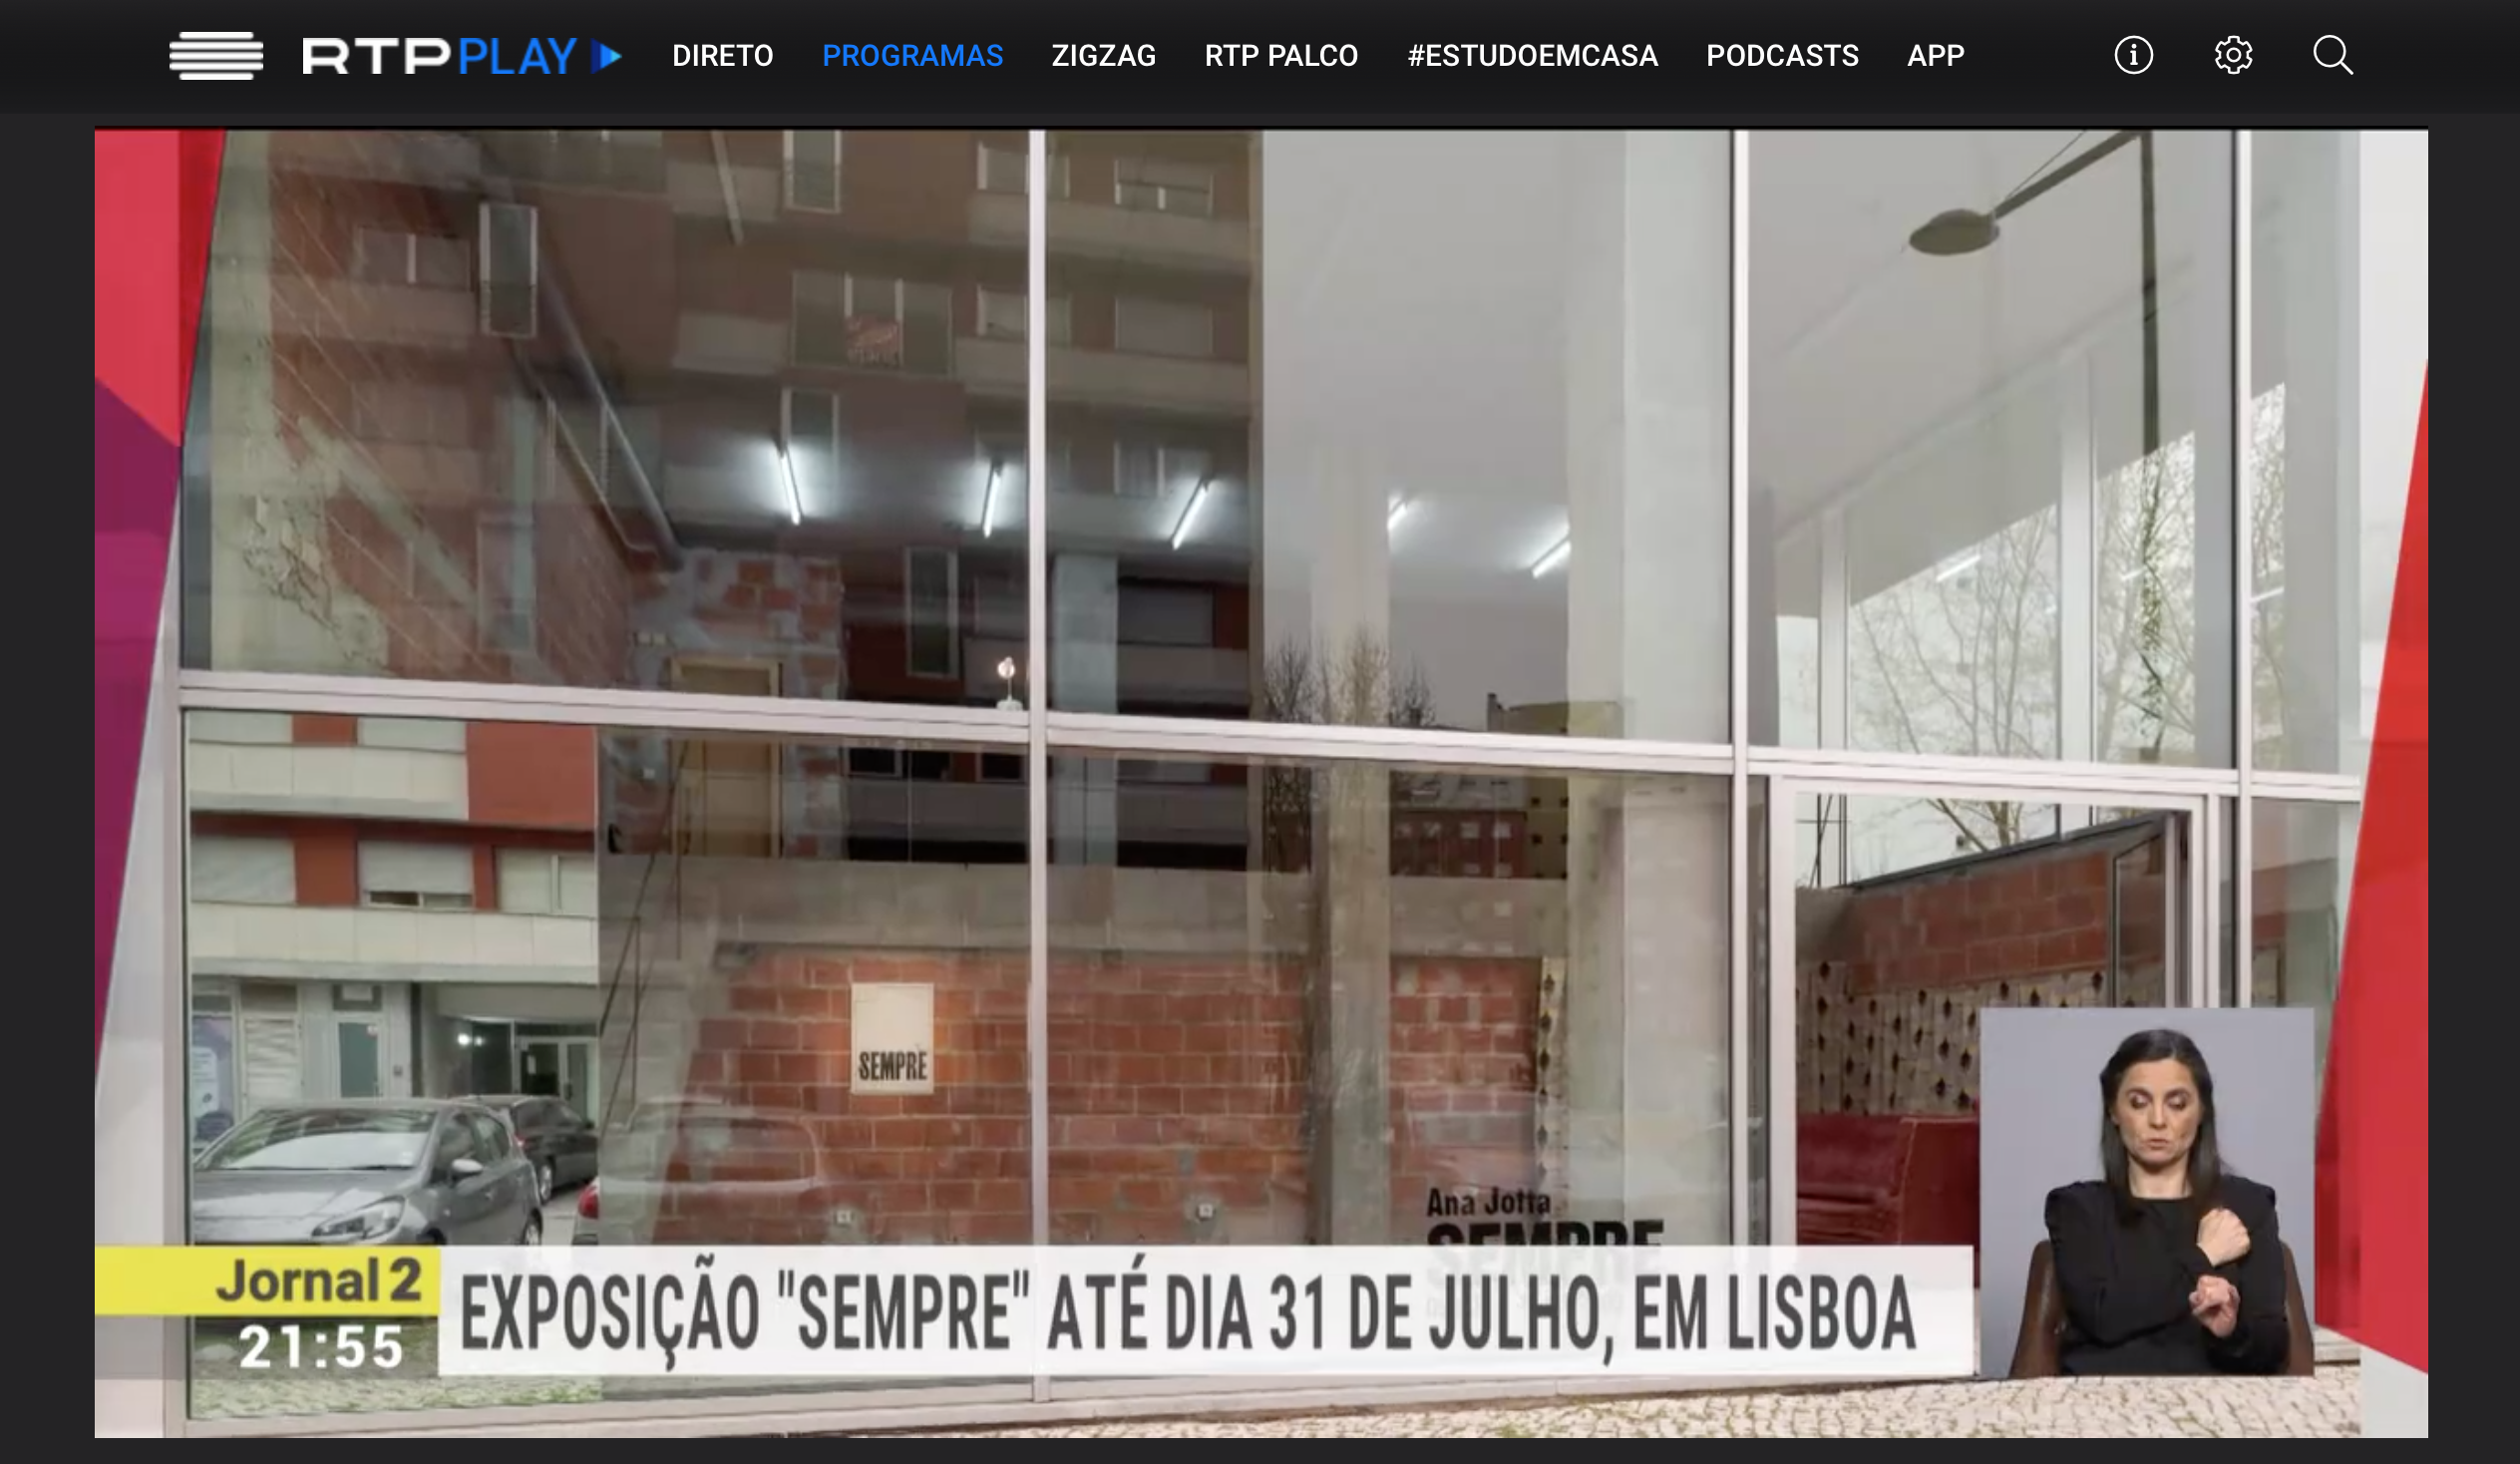 RTP 2, Jornal 2 | 02.04.2022 | interview with Ana Jotta